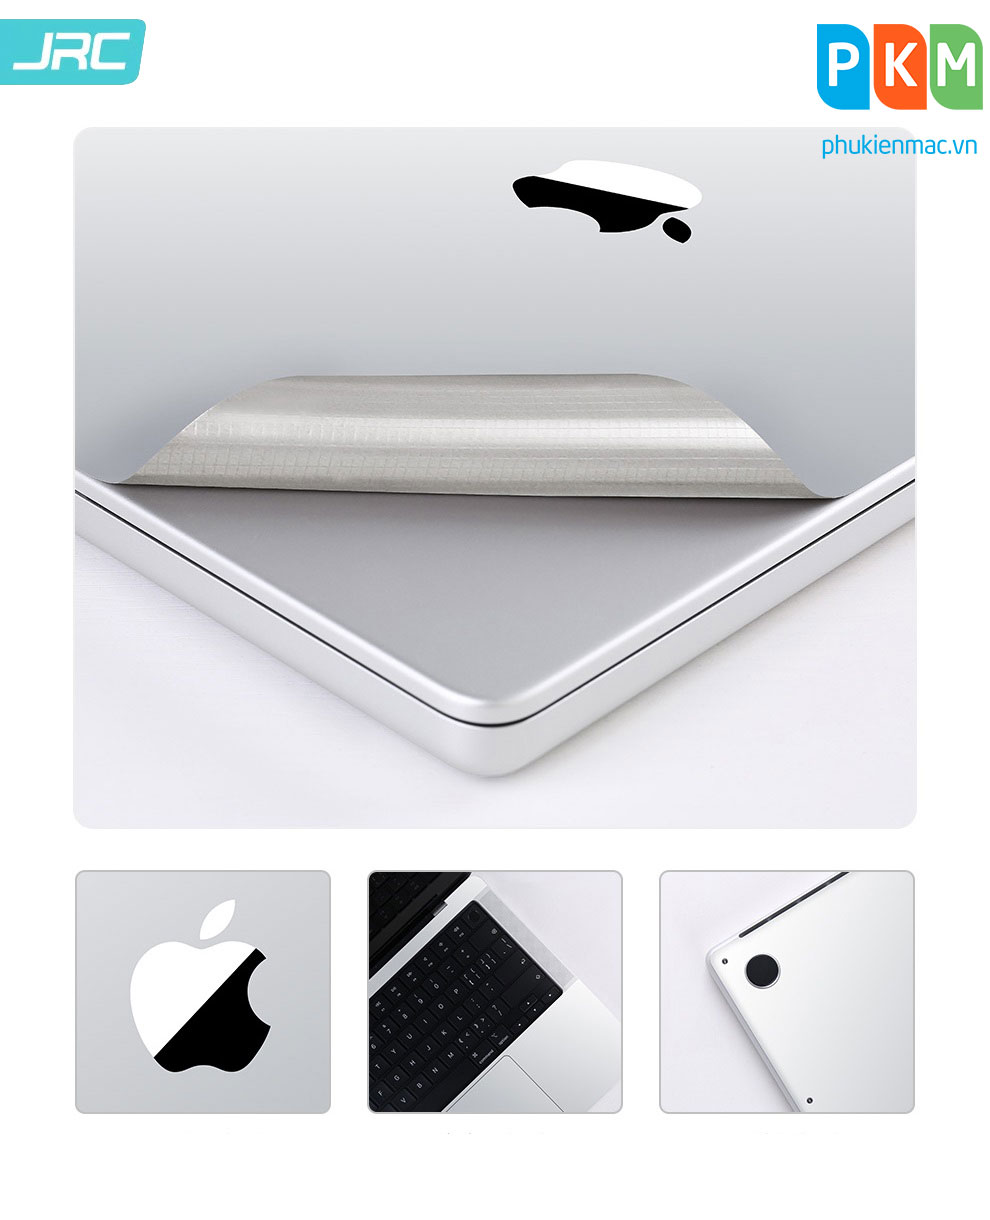 Dán Macbook 13 inch Innostyle 6 in 1  Giá rẻ